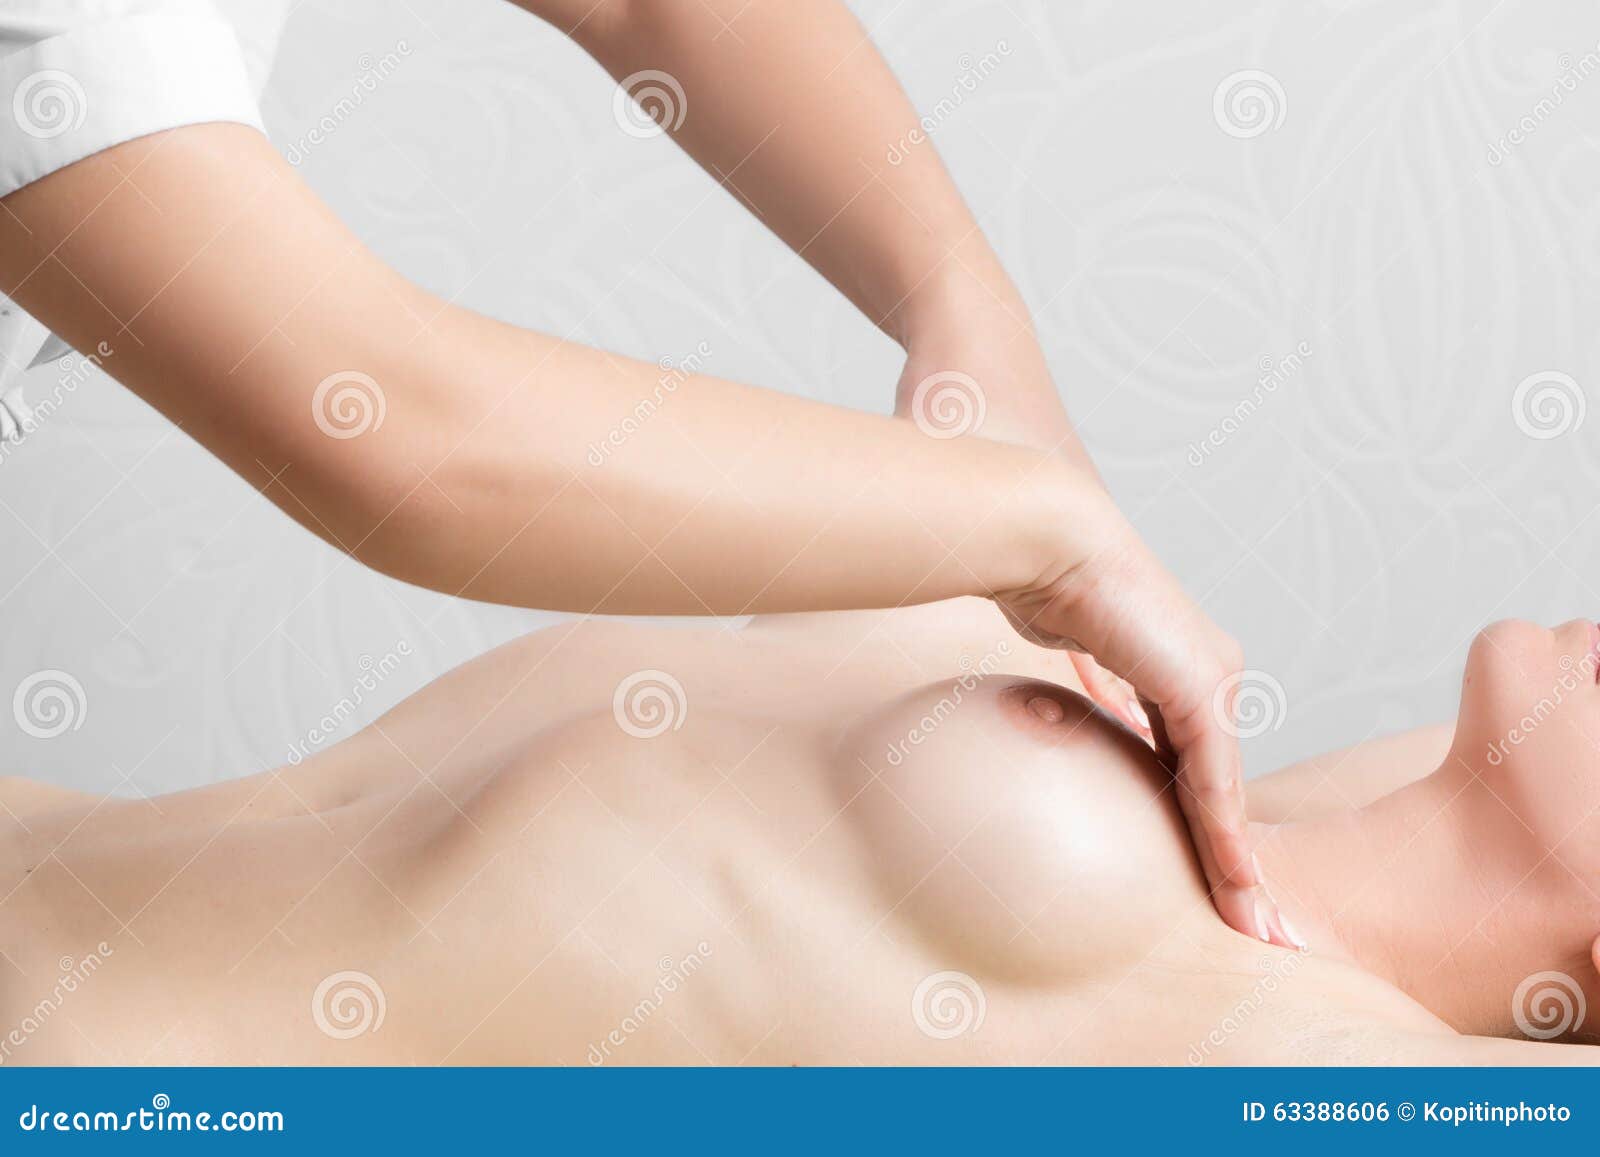 массаж грудью 4 размер фото 10